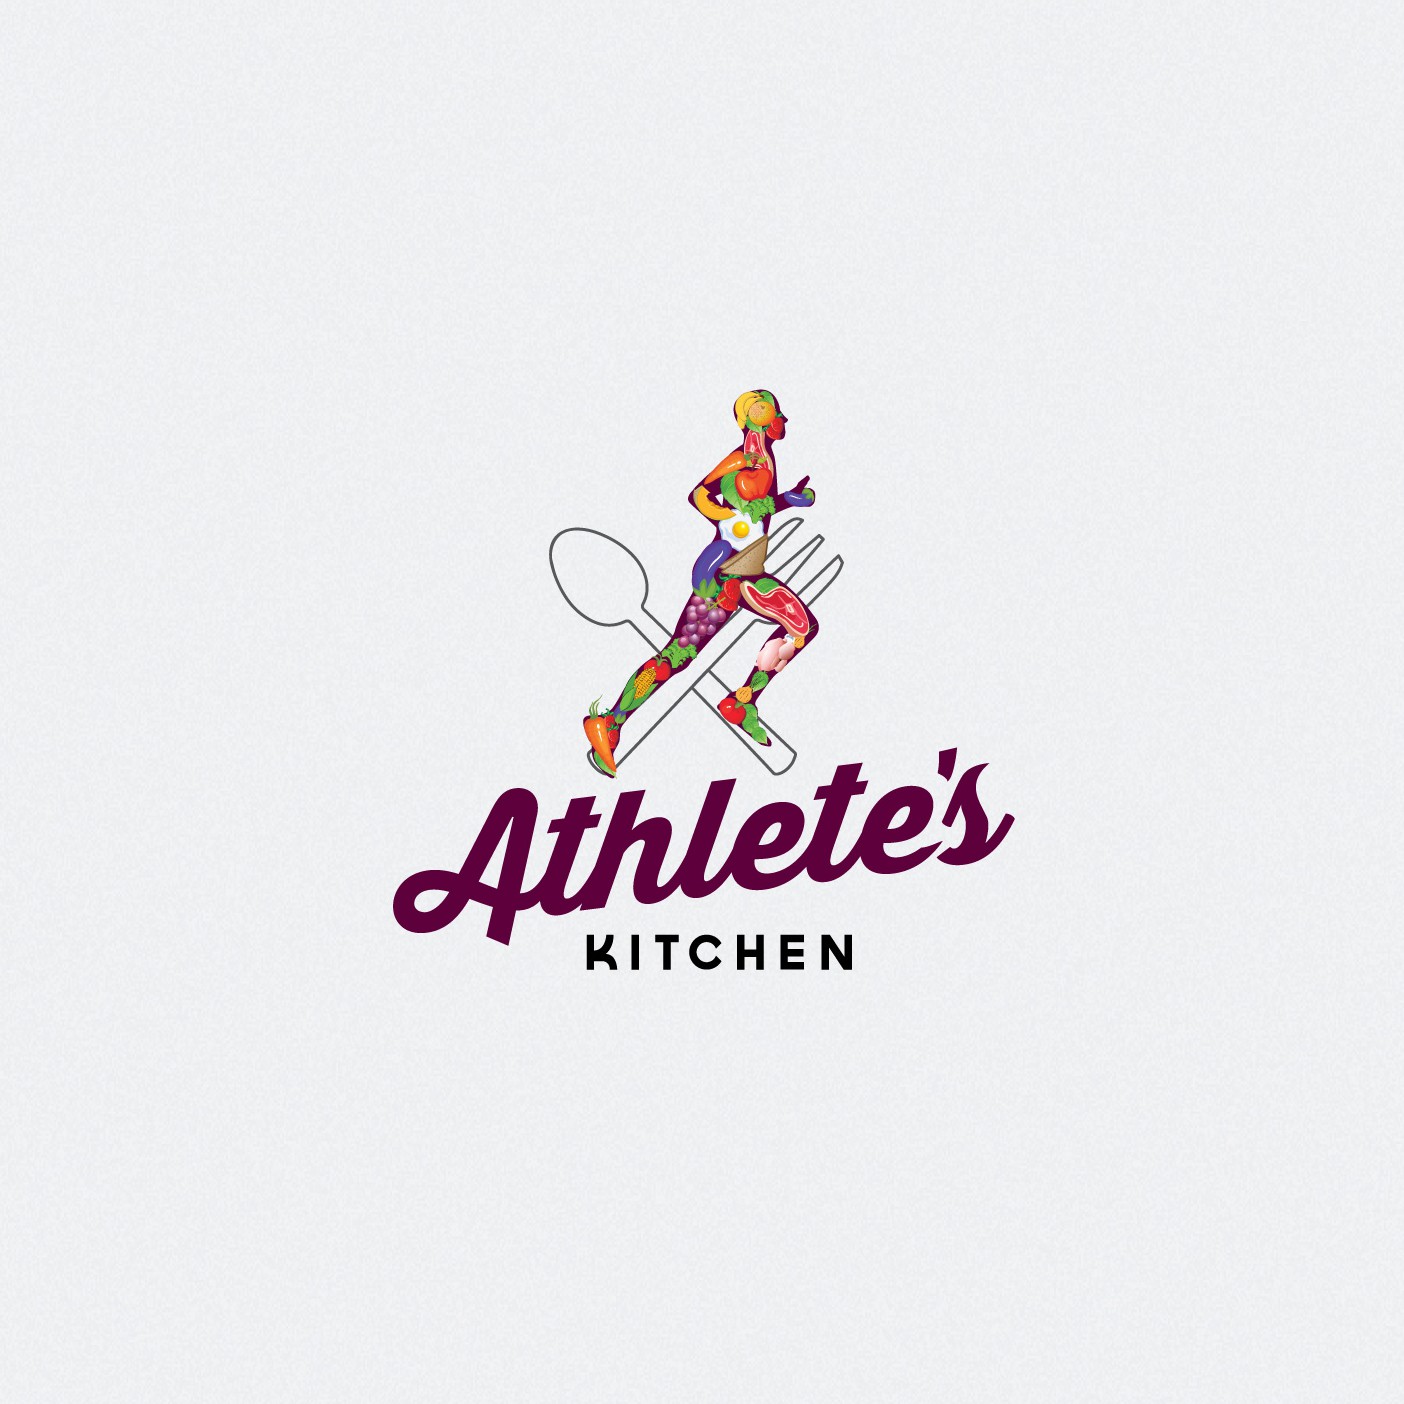 Athletes Kitchen logo